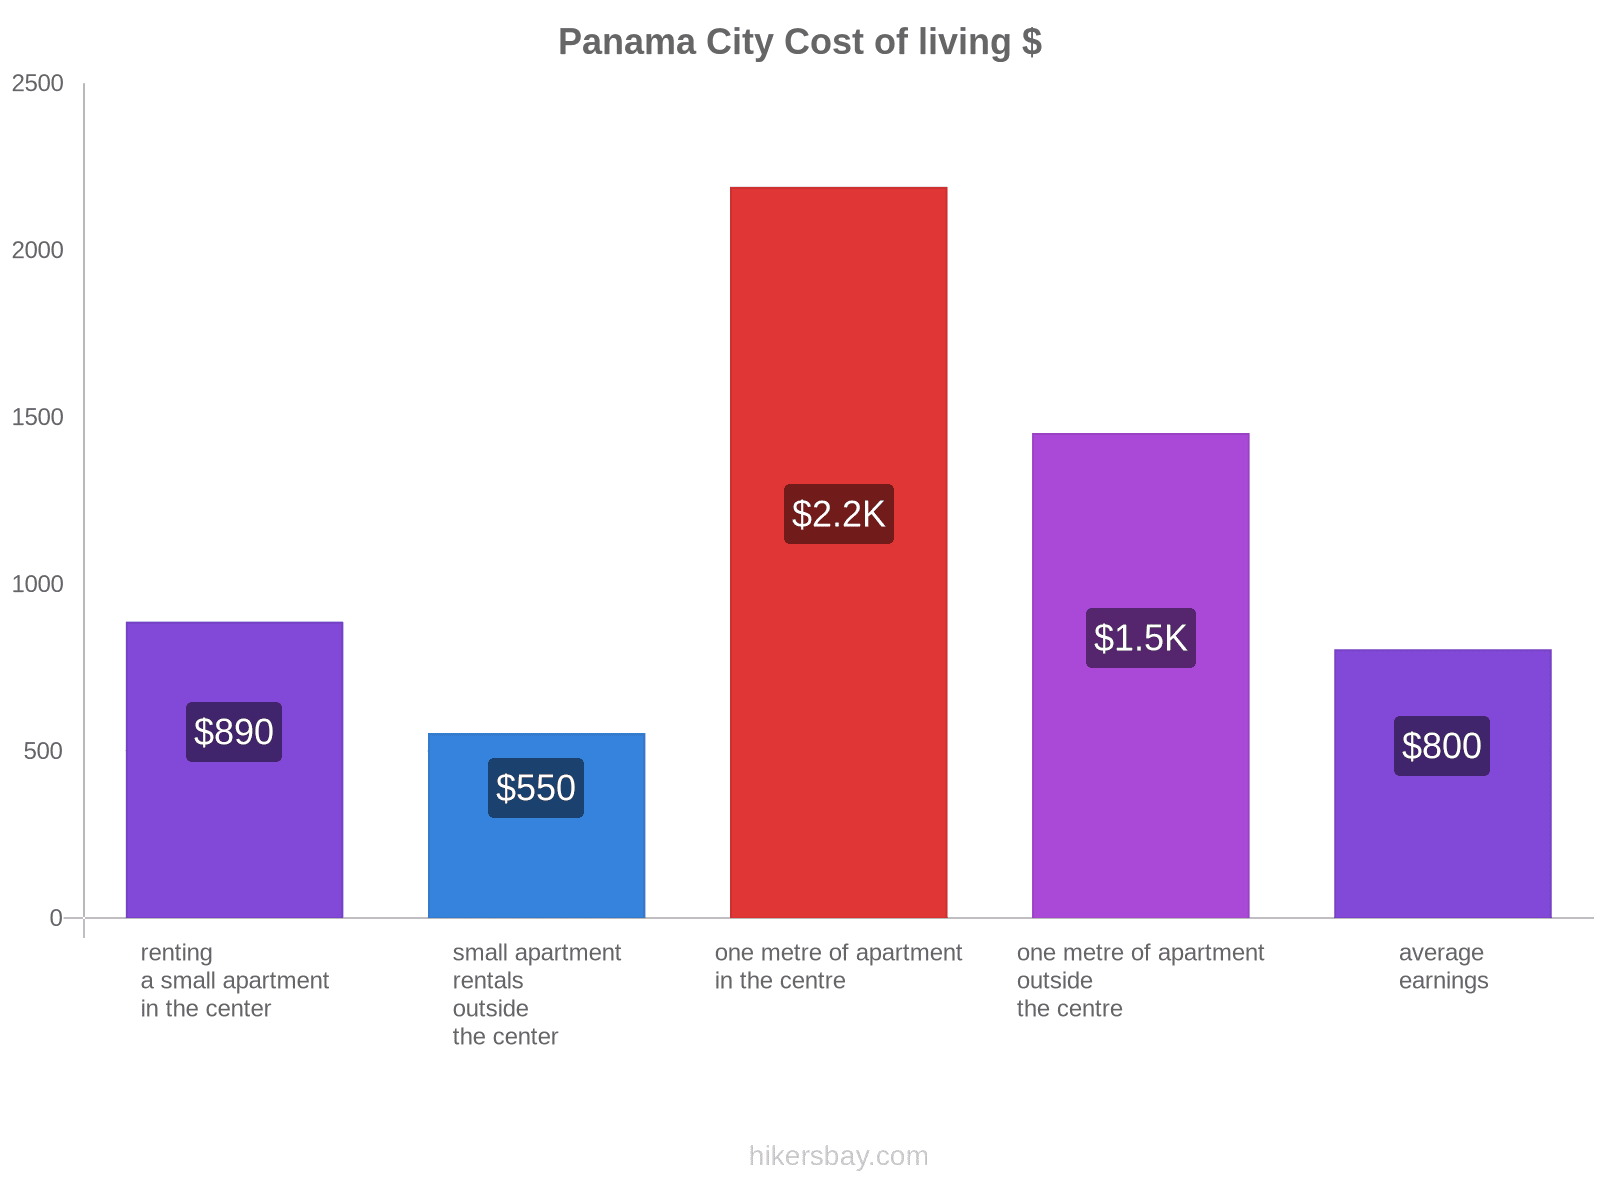 Panama City cost of living hikersbay.com